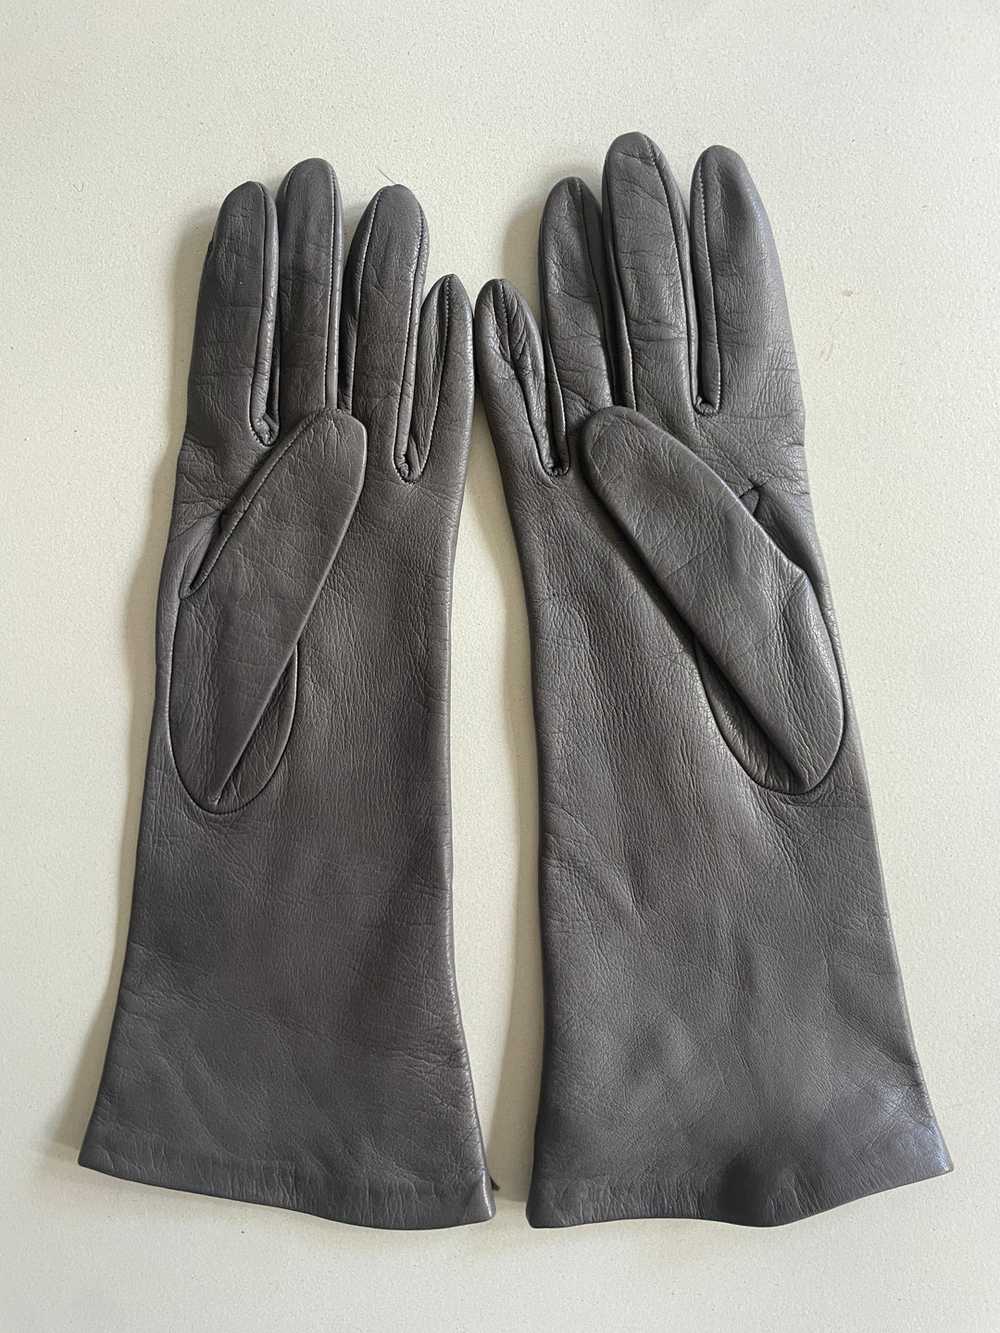 Vintage Gray Kid Leather Gloves - image 3